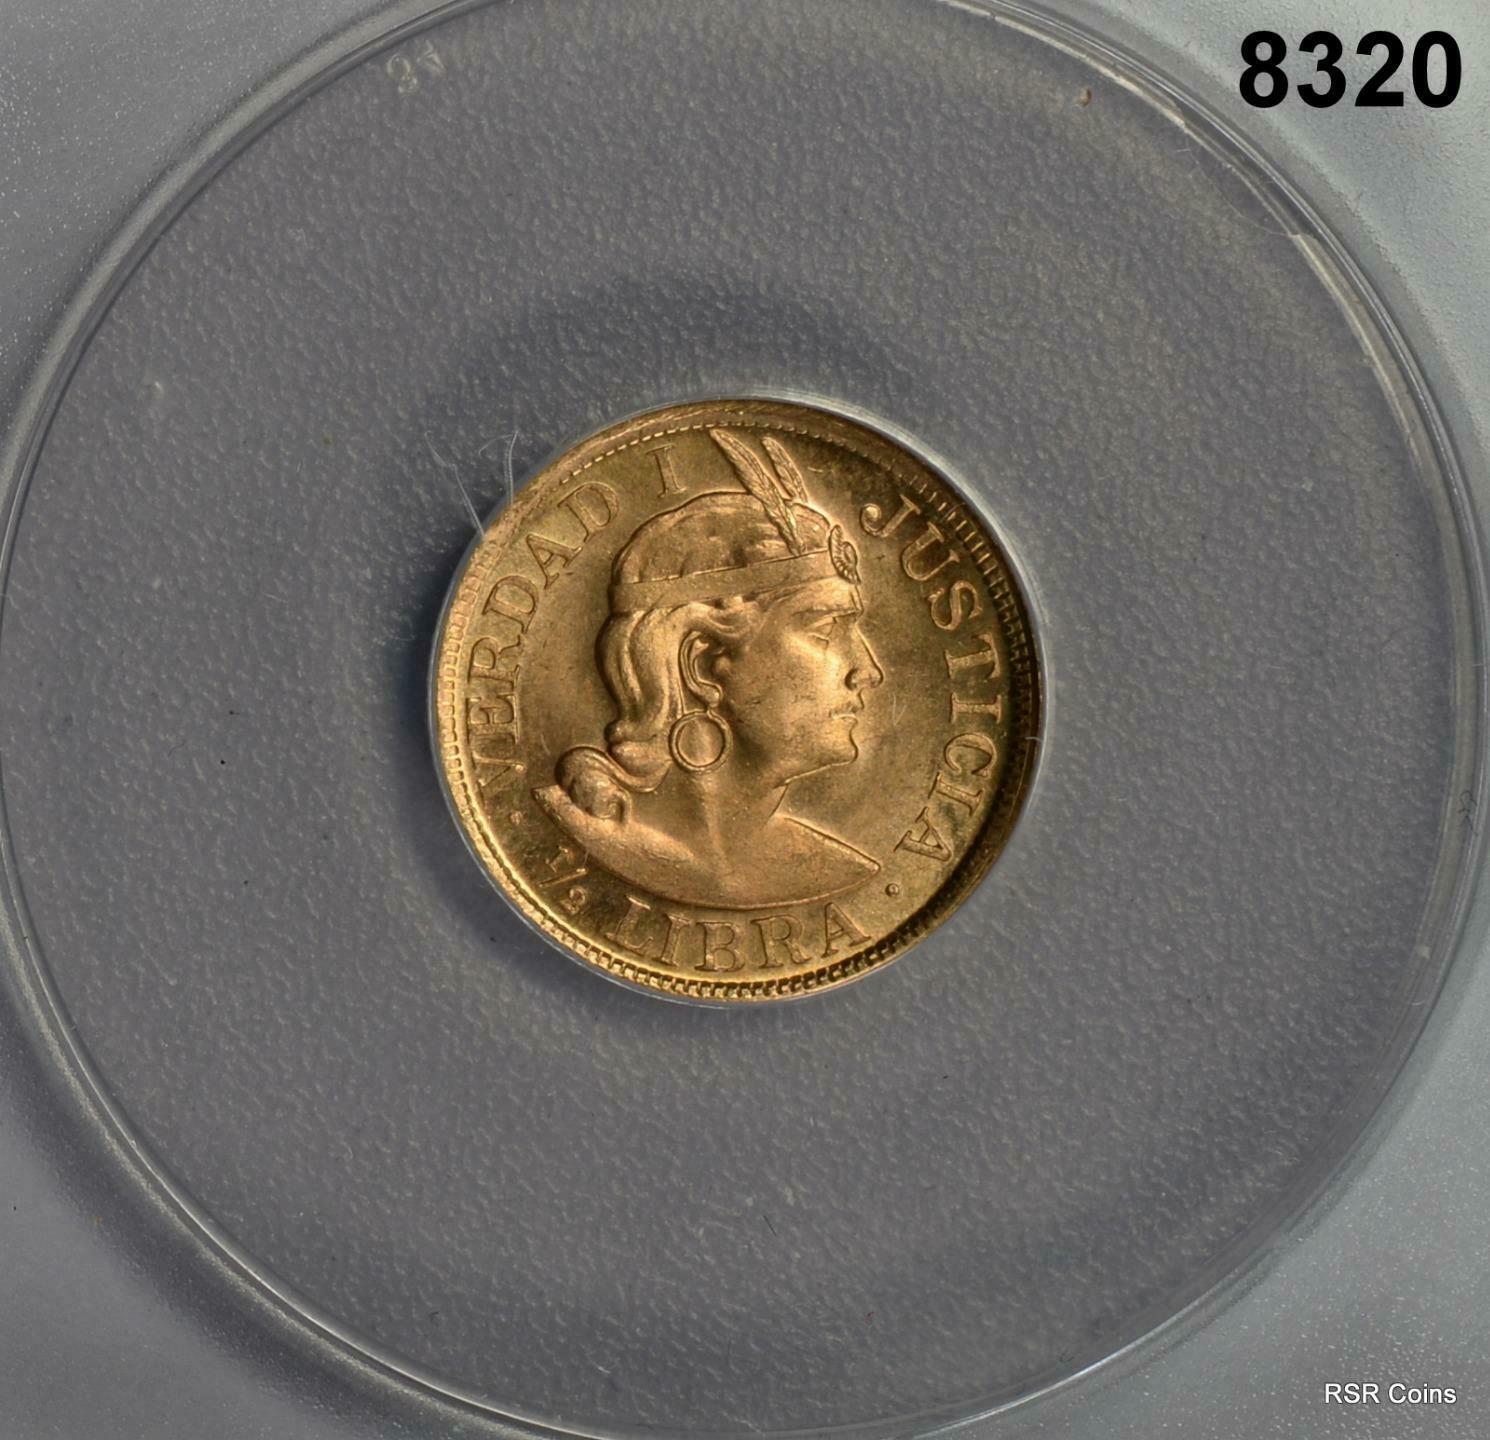 1966 1/2 LIBRA PERU GOLD COIN ANACS CERTIFIED MS65! #8320